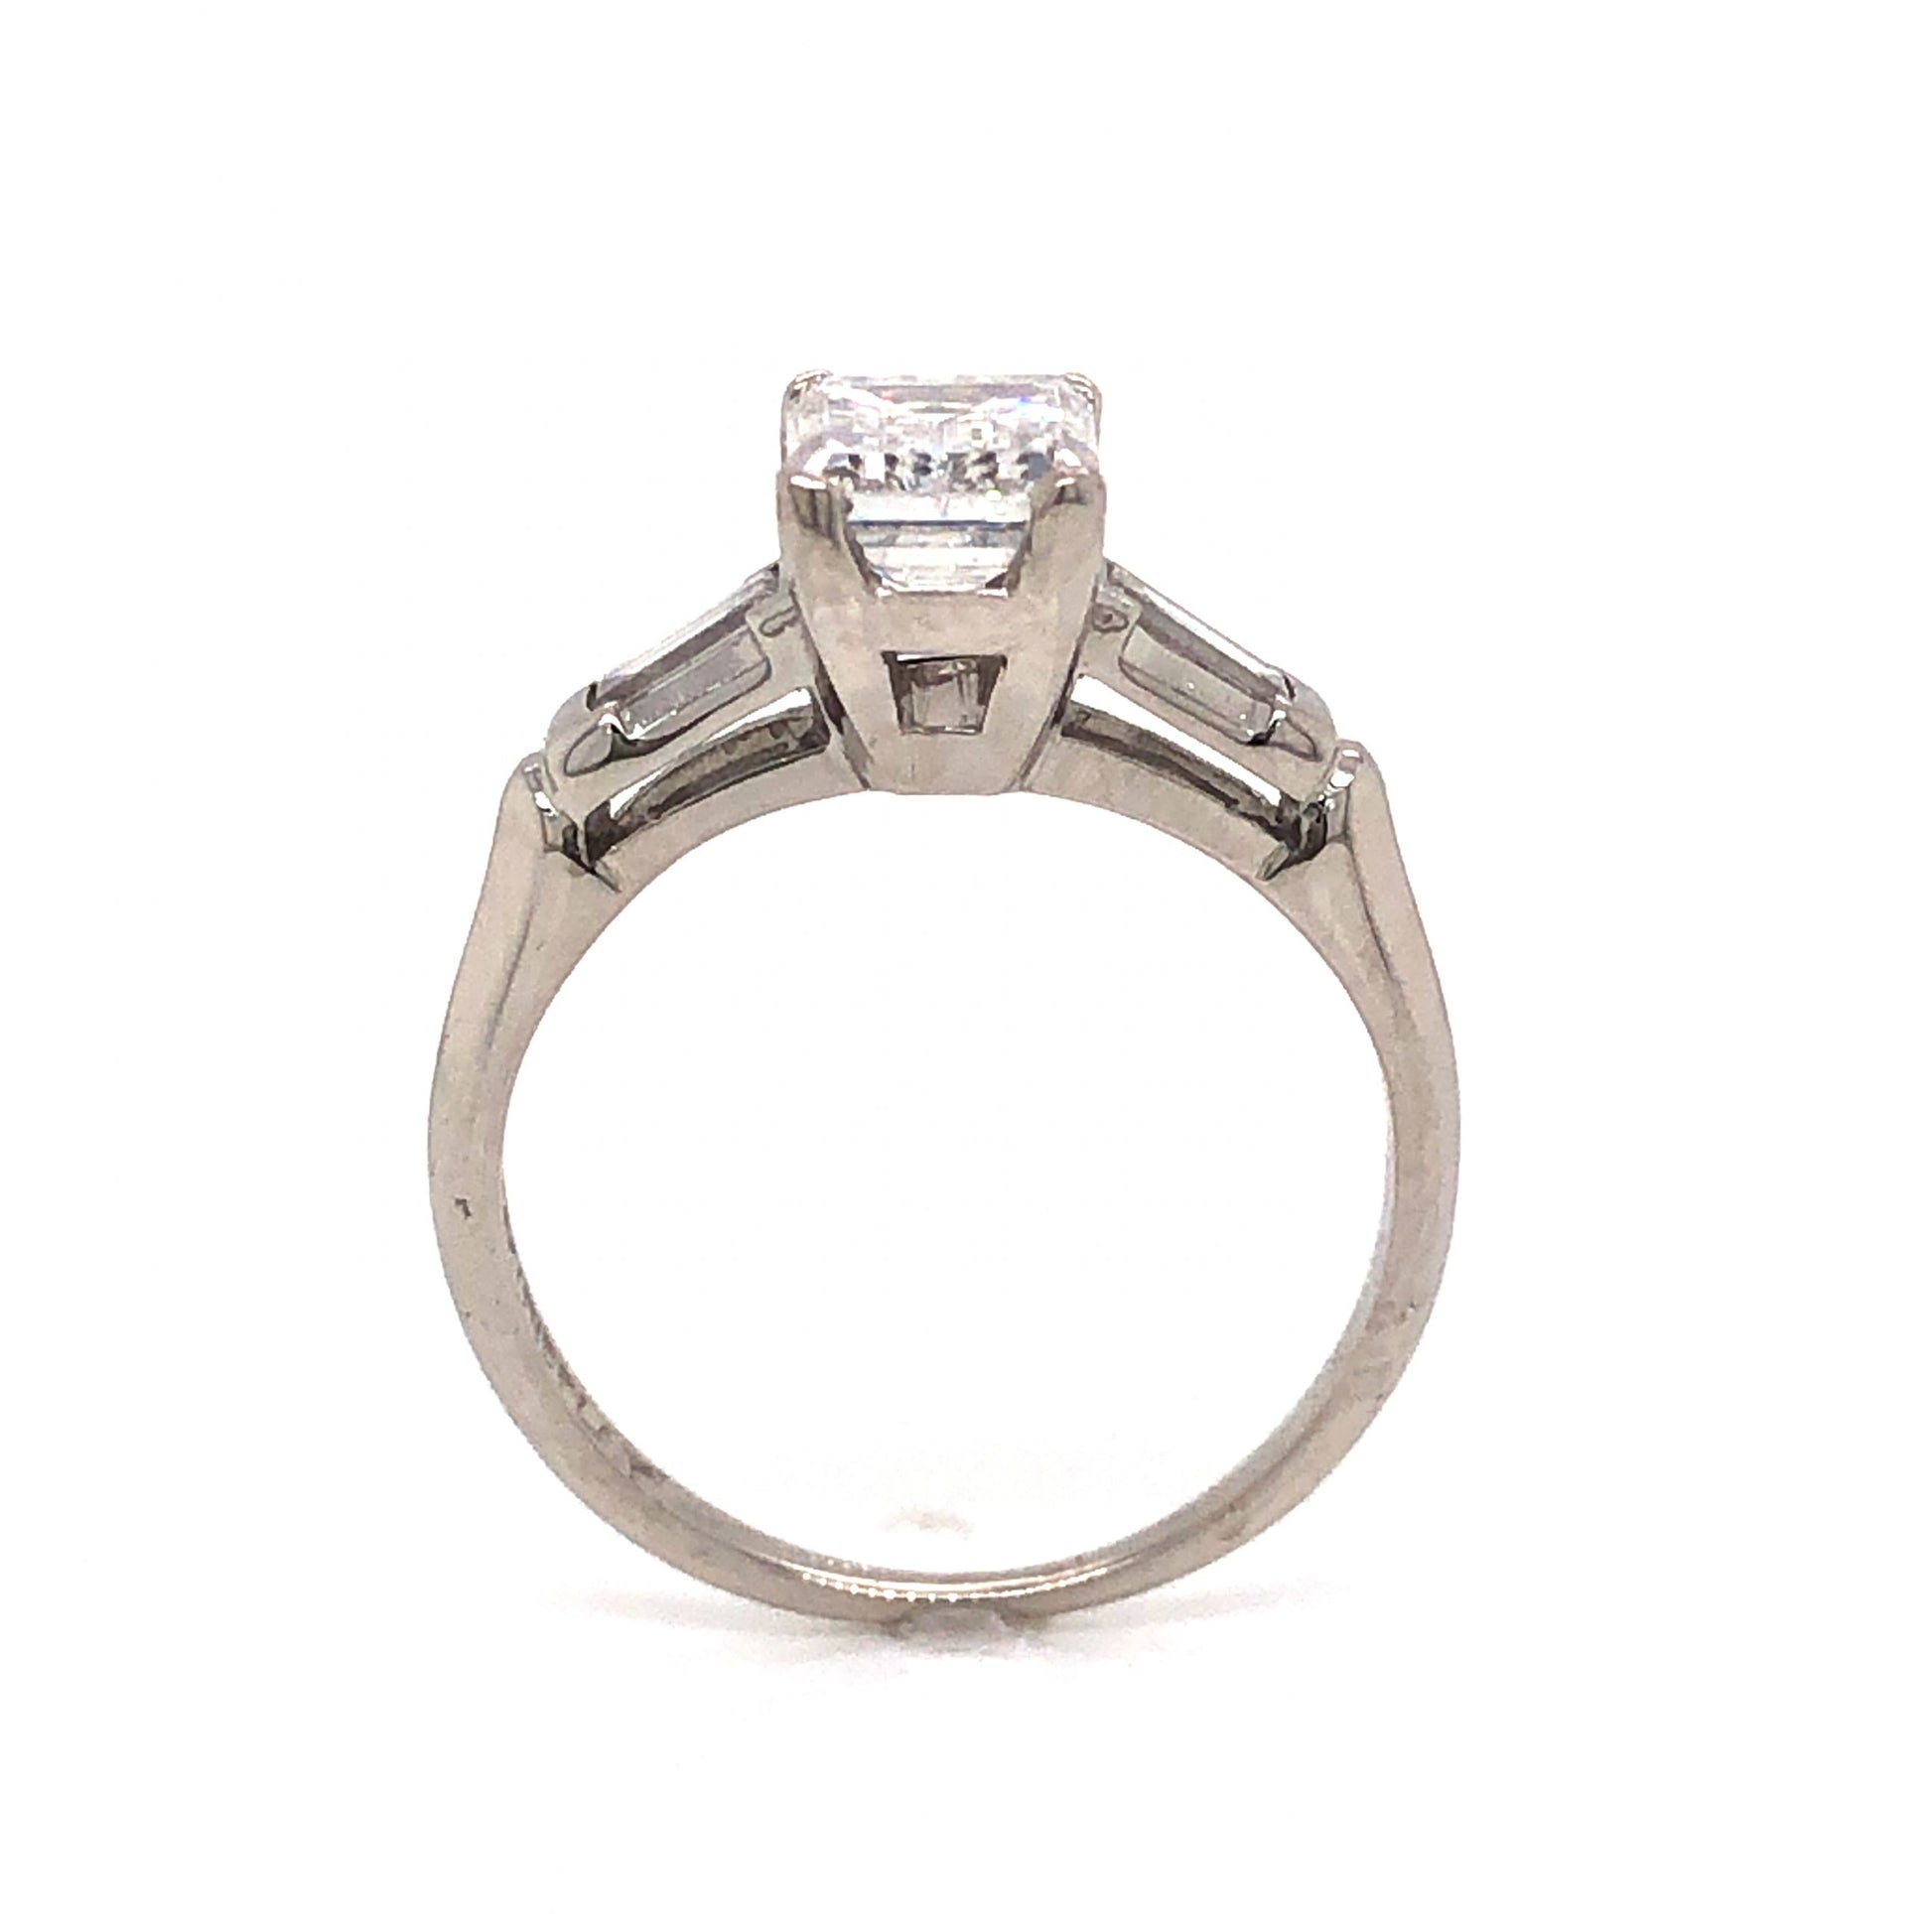 .97 Emerald Cut Art Deco Diamond Engagement Ring in PlatinumComposition: PlatinumRing Size: 4.5Total Diamond Weight: 1.27 ctTotal Gram Weight: 3.5 gInscription: 10% IRID PLAT